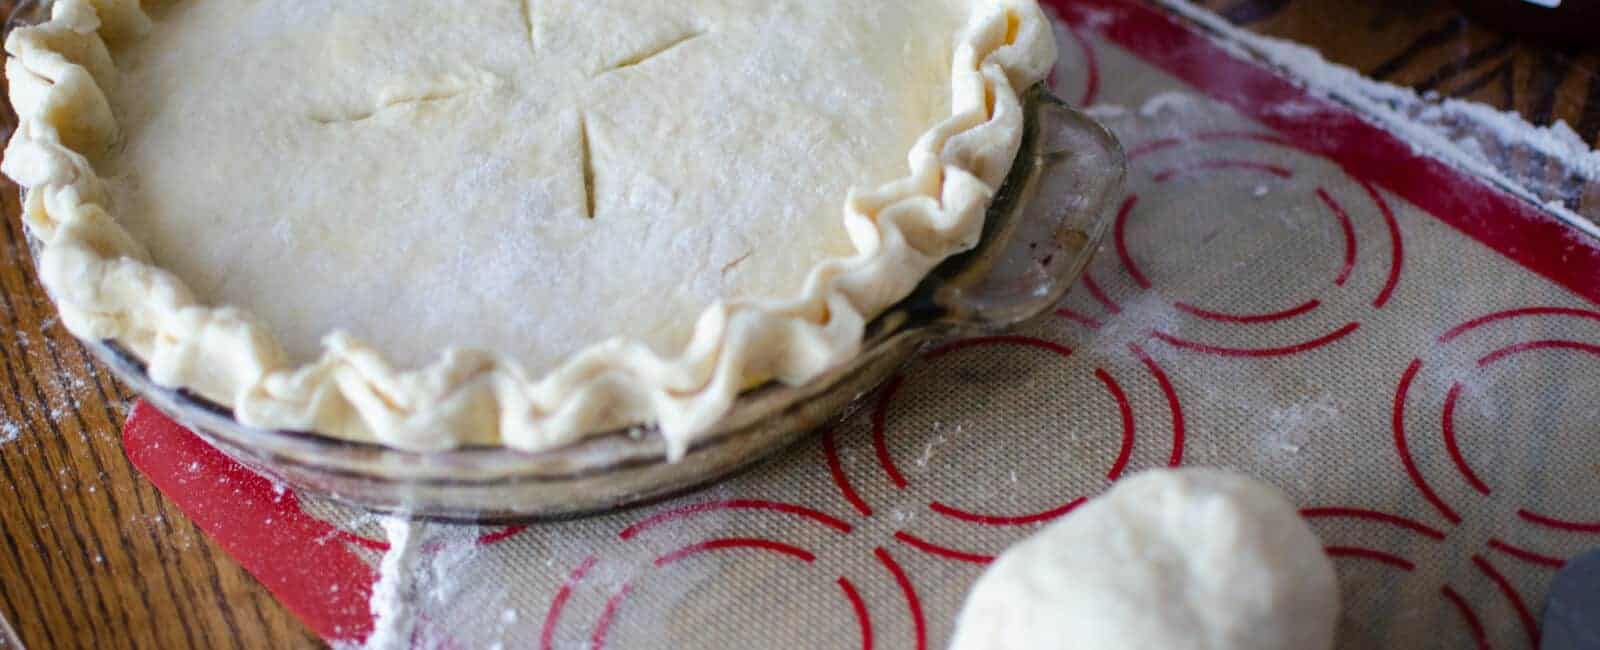 Easy Sourdough Pie Crust